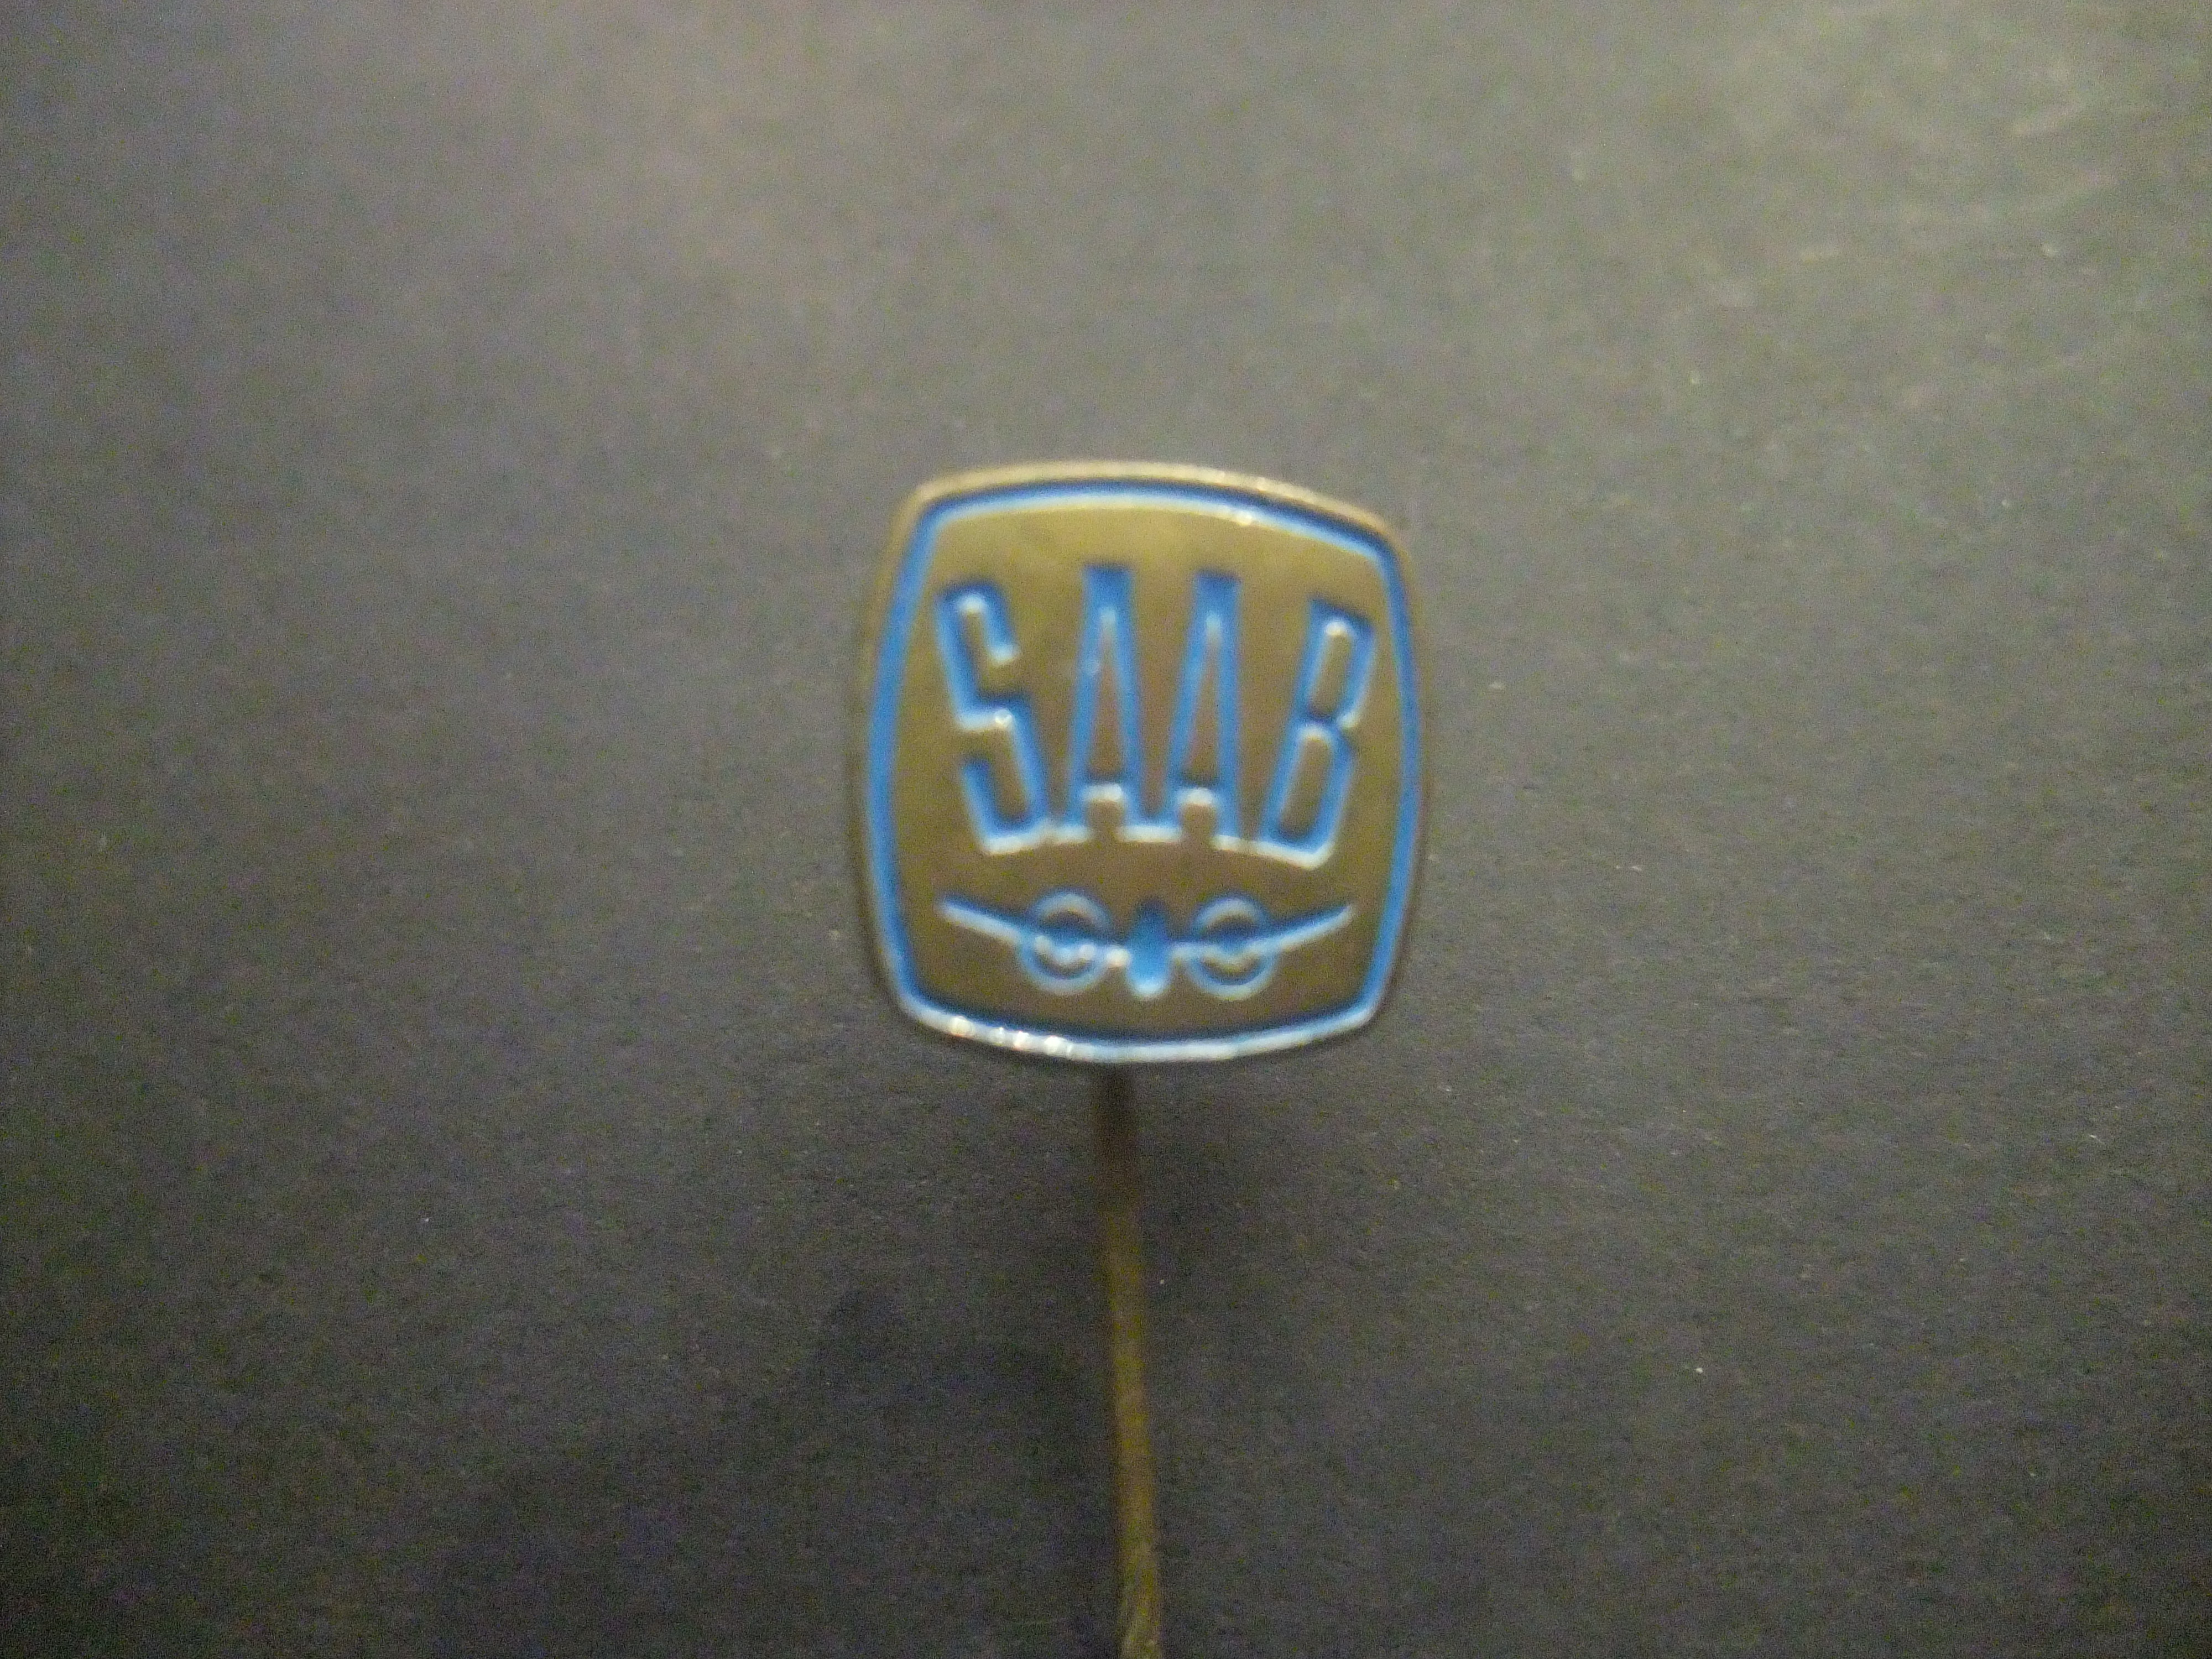 Saab Zweedse autofabrikant logo